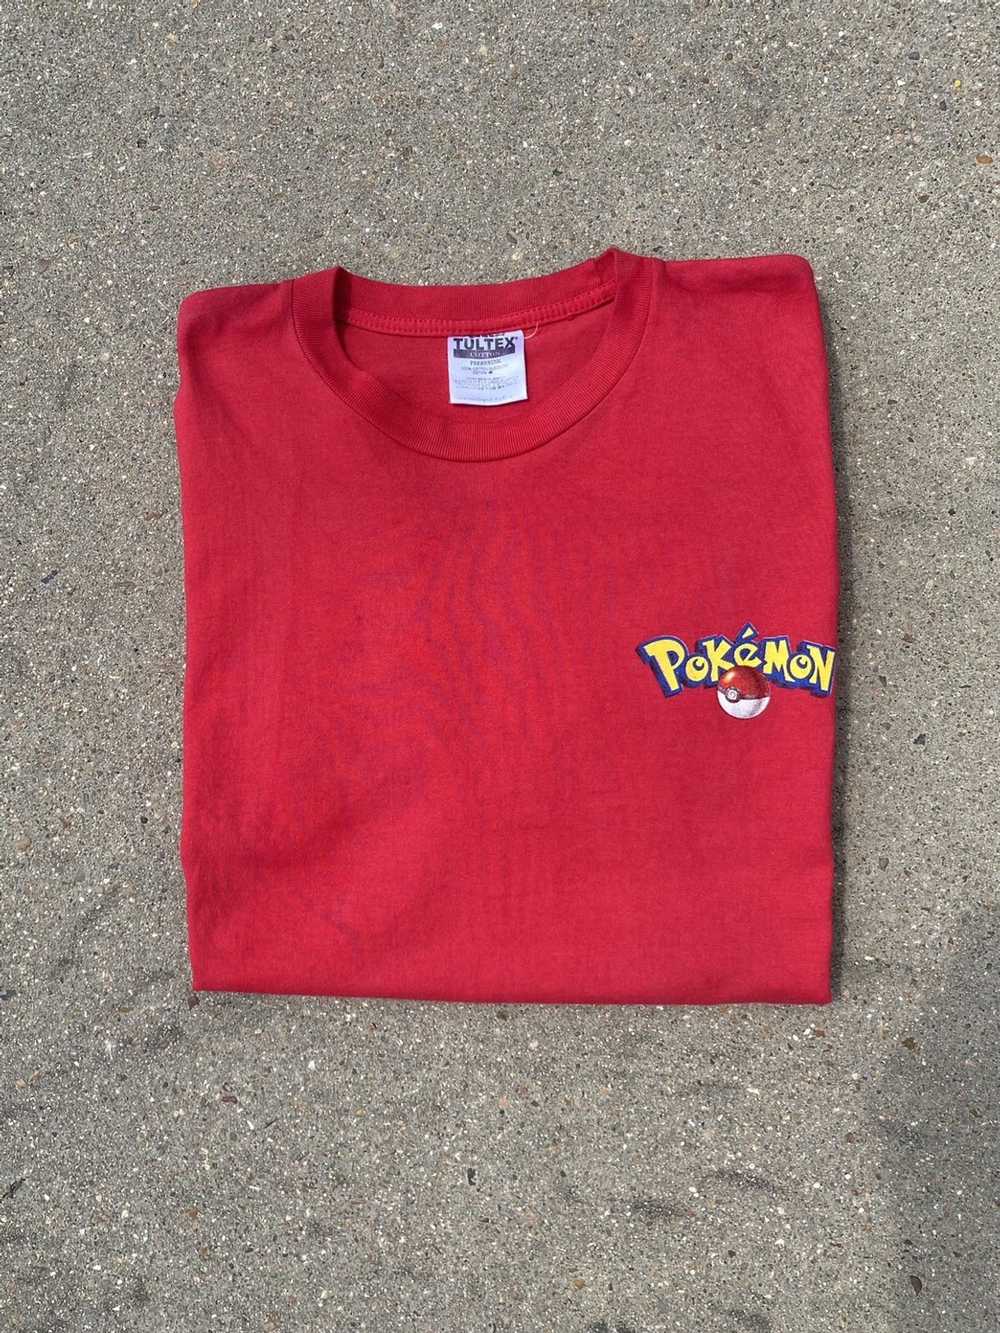 Pokemon × Vintage Vintage Pokémon power t shirt - image 4